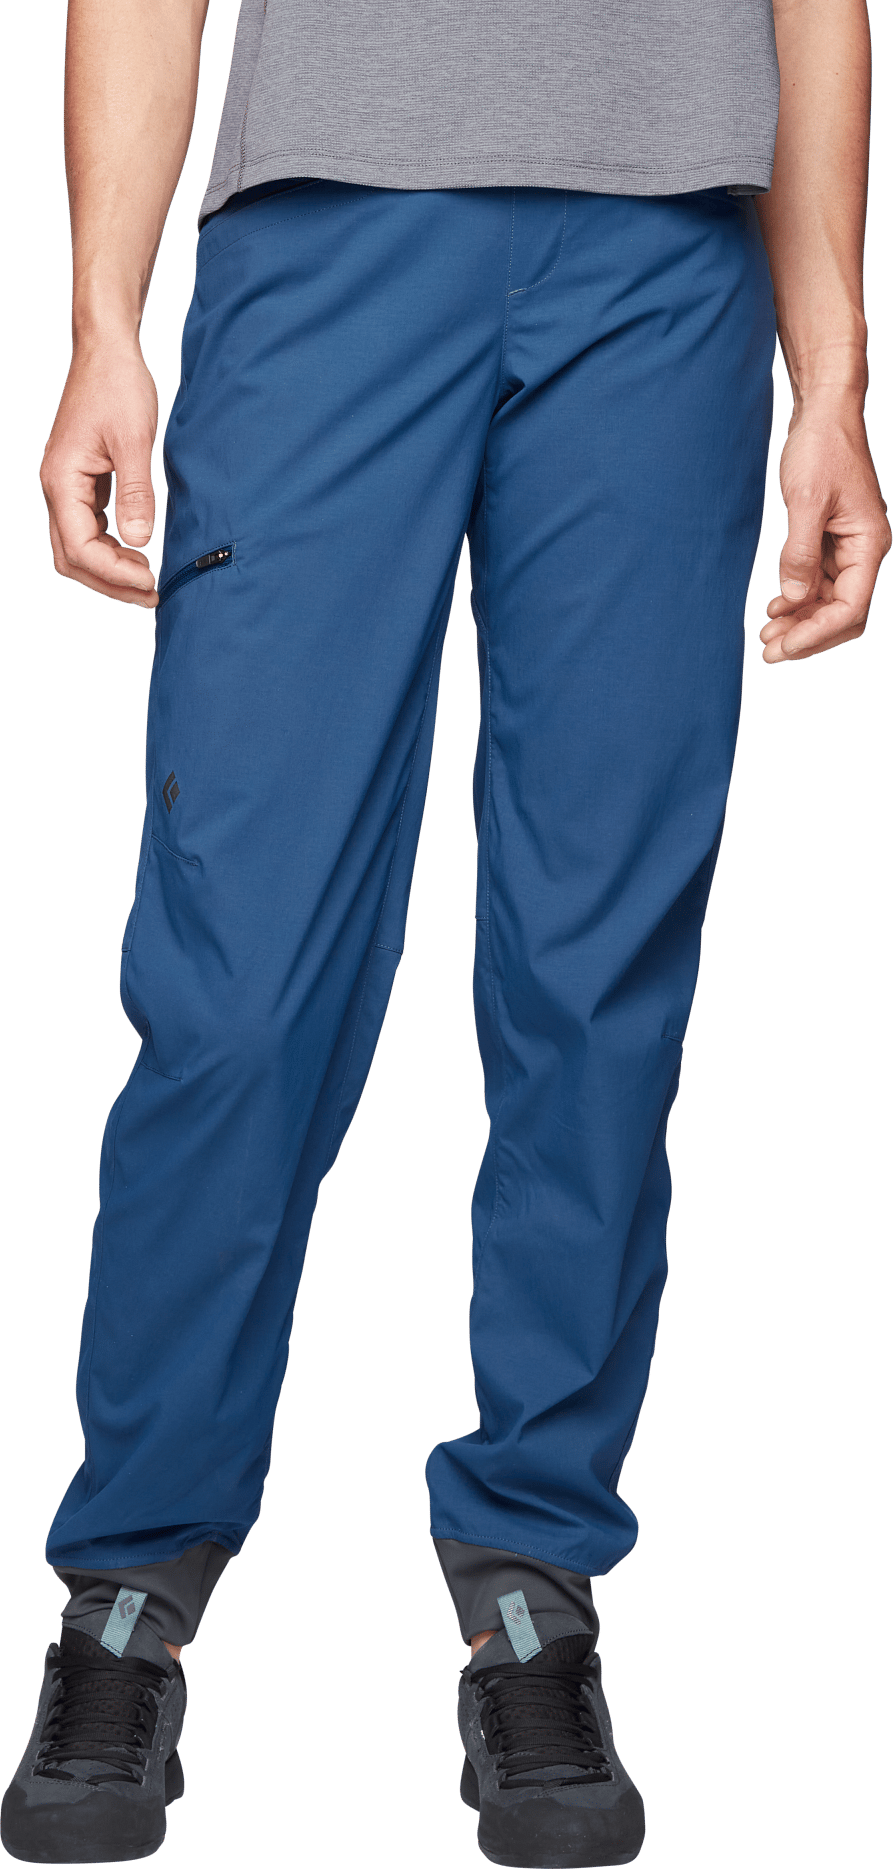 Women's Technician Jogger Pants Ink Blue